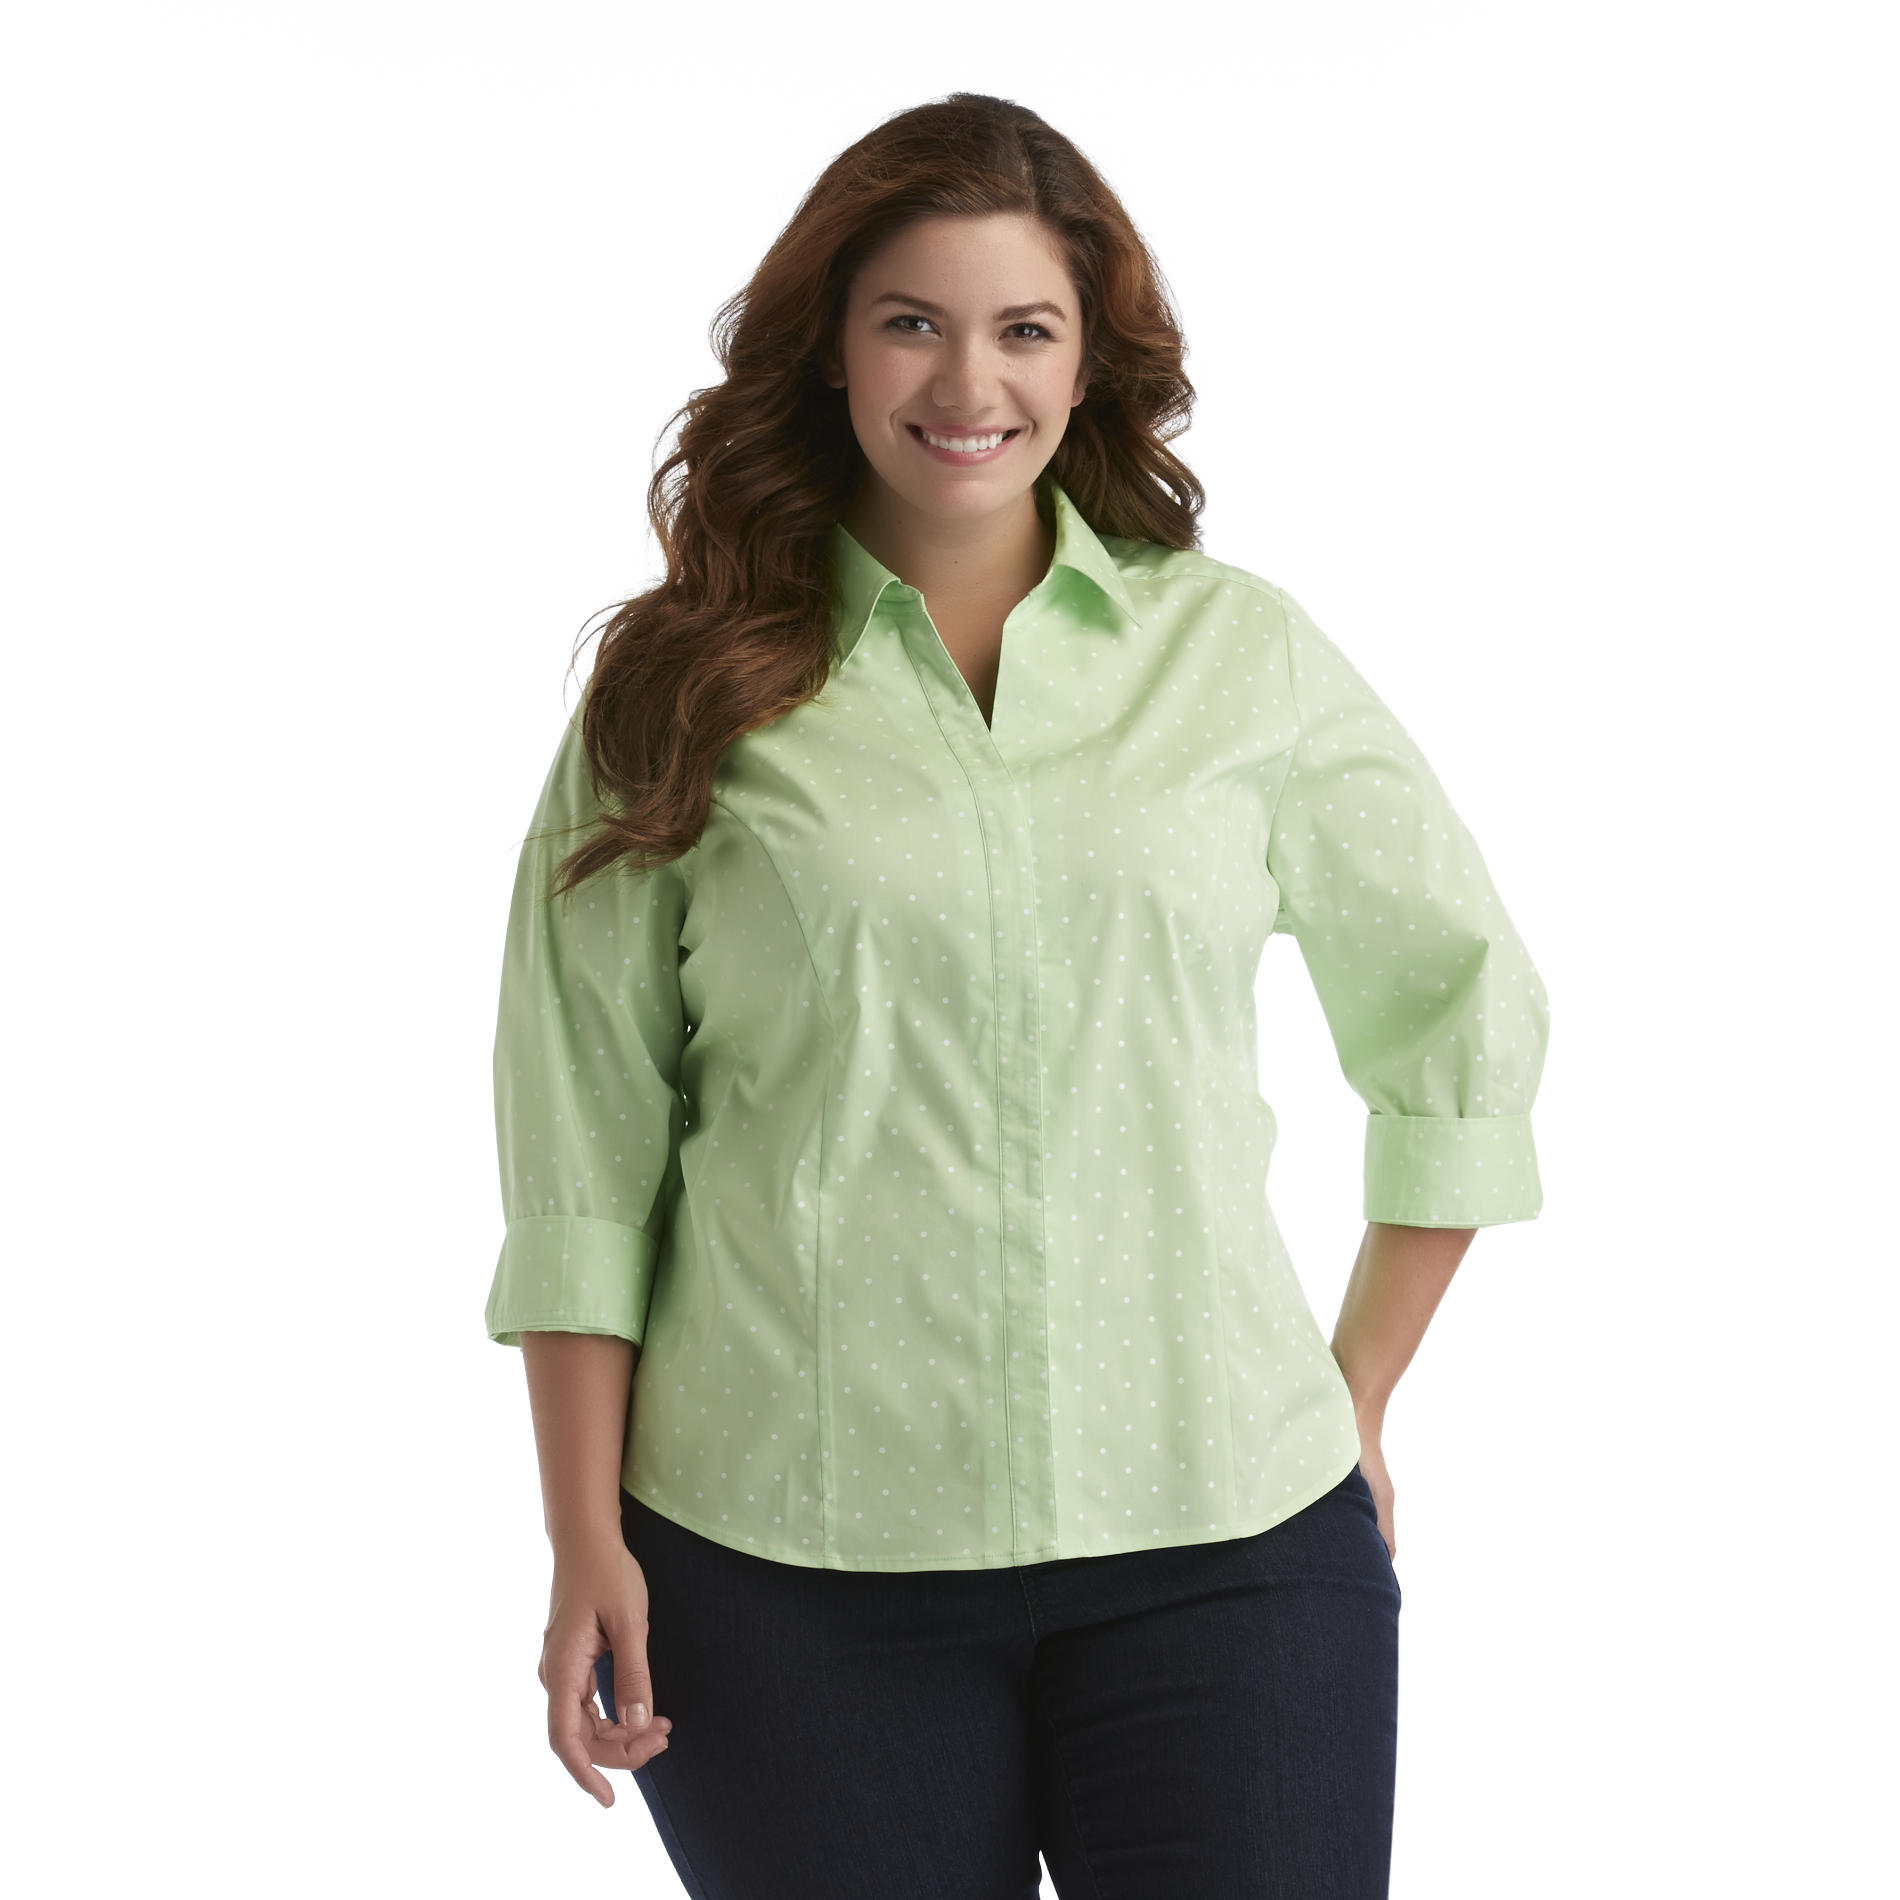 Basic Editions Women's Plus Shaped Stretch Shirt - Polka Dot